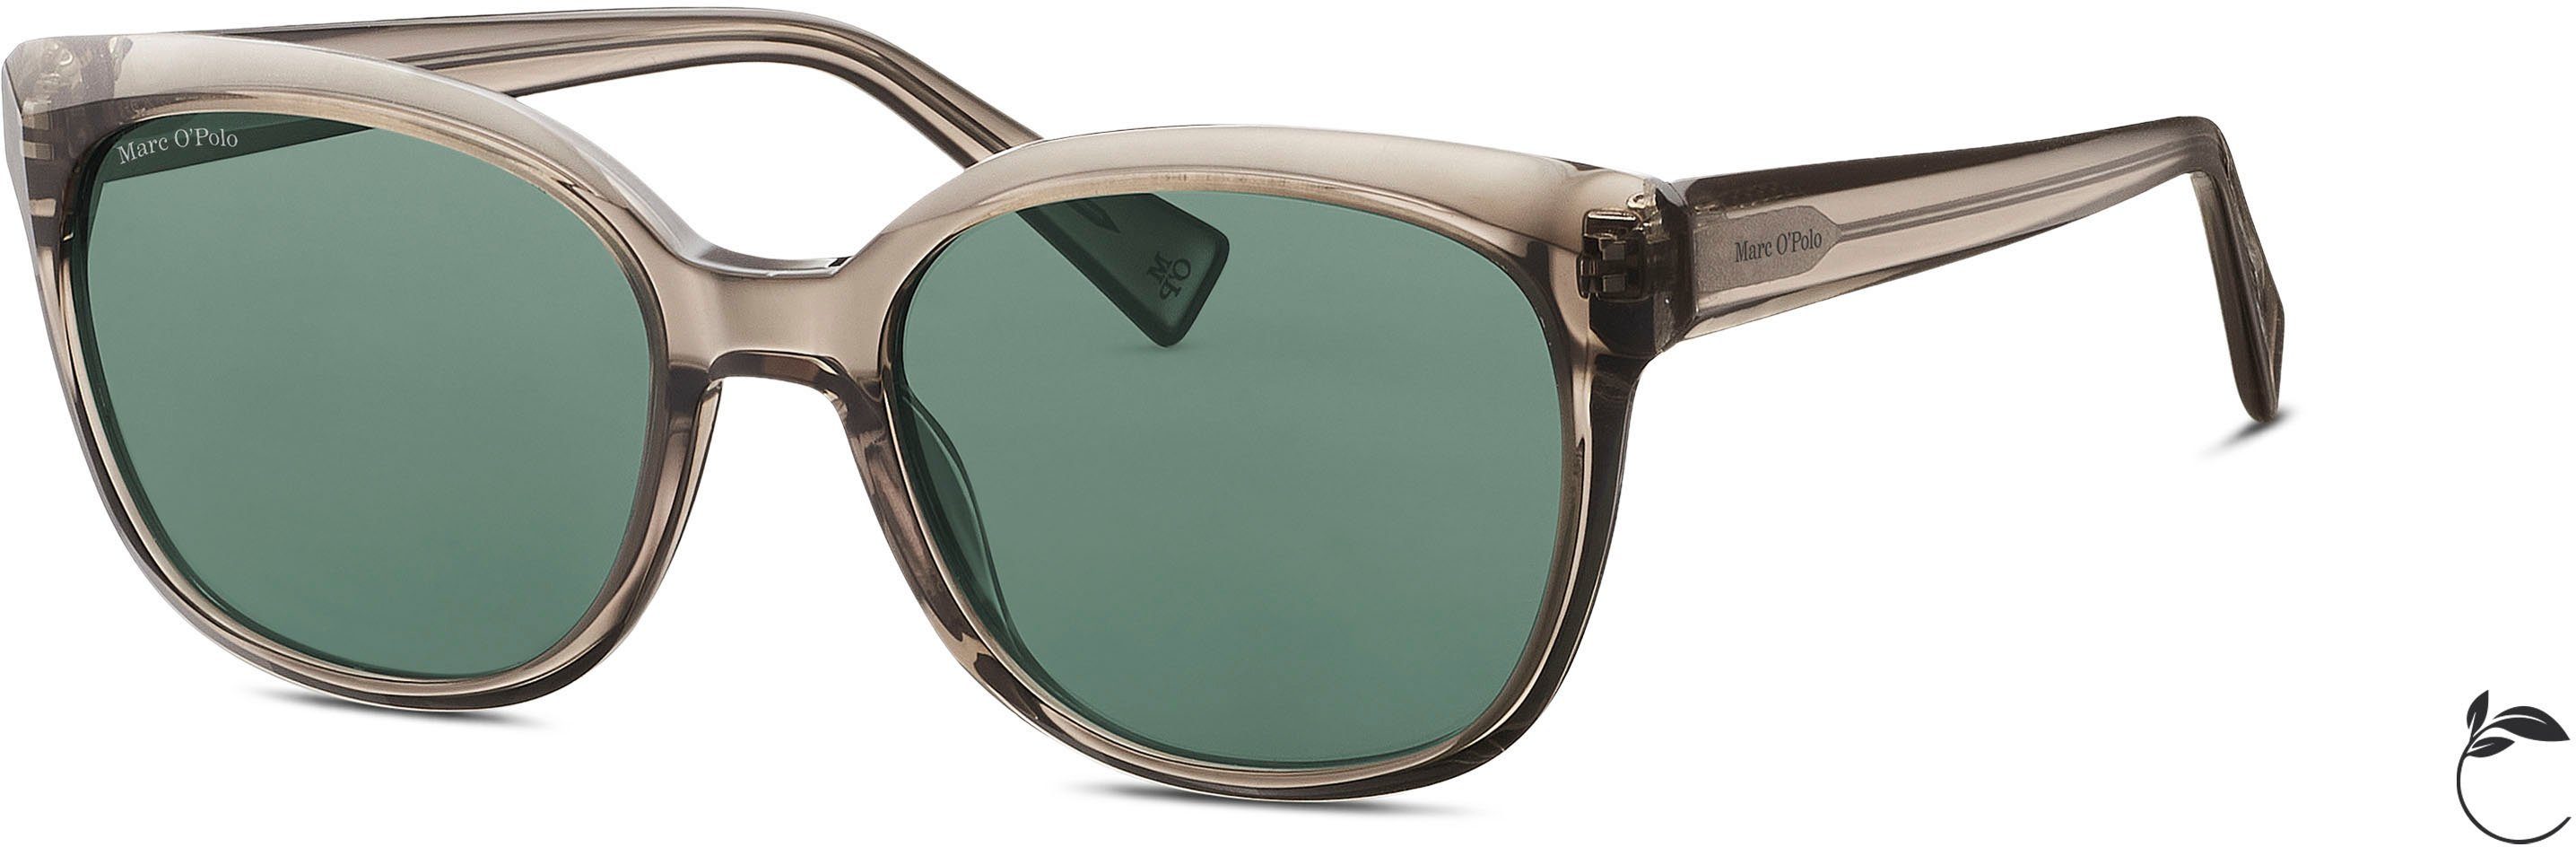 Marc O'Polo Sonnenbrille Modell 506196 Karree-Form hellbraun-grün